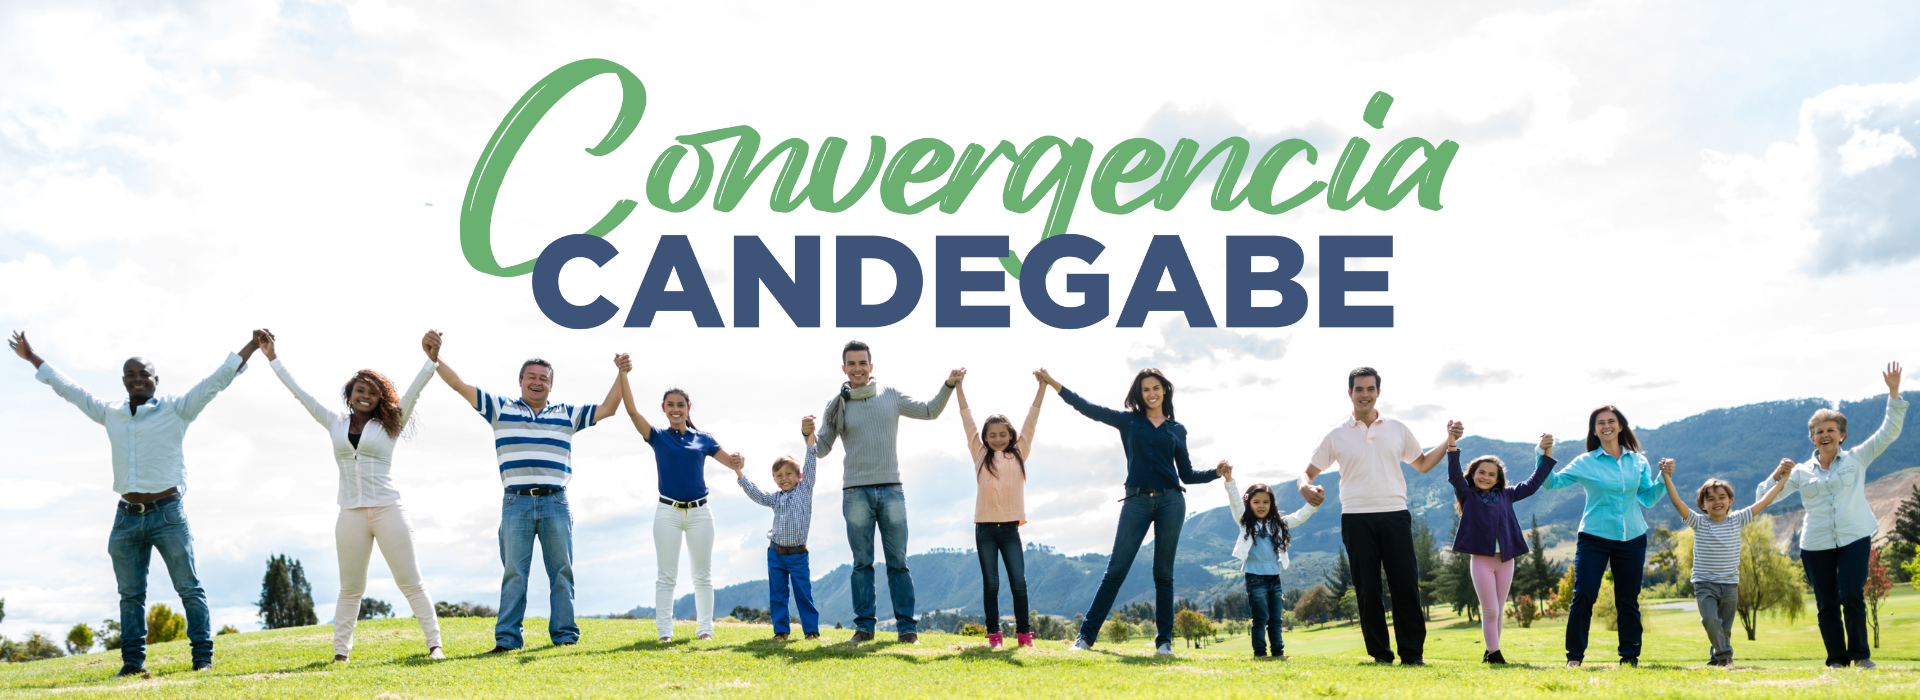 Convergencia Candegabe